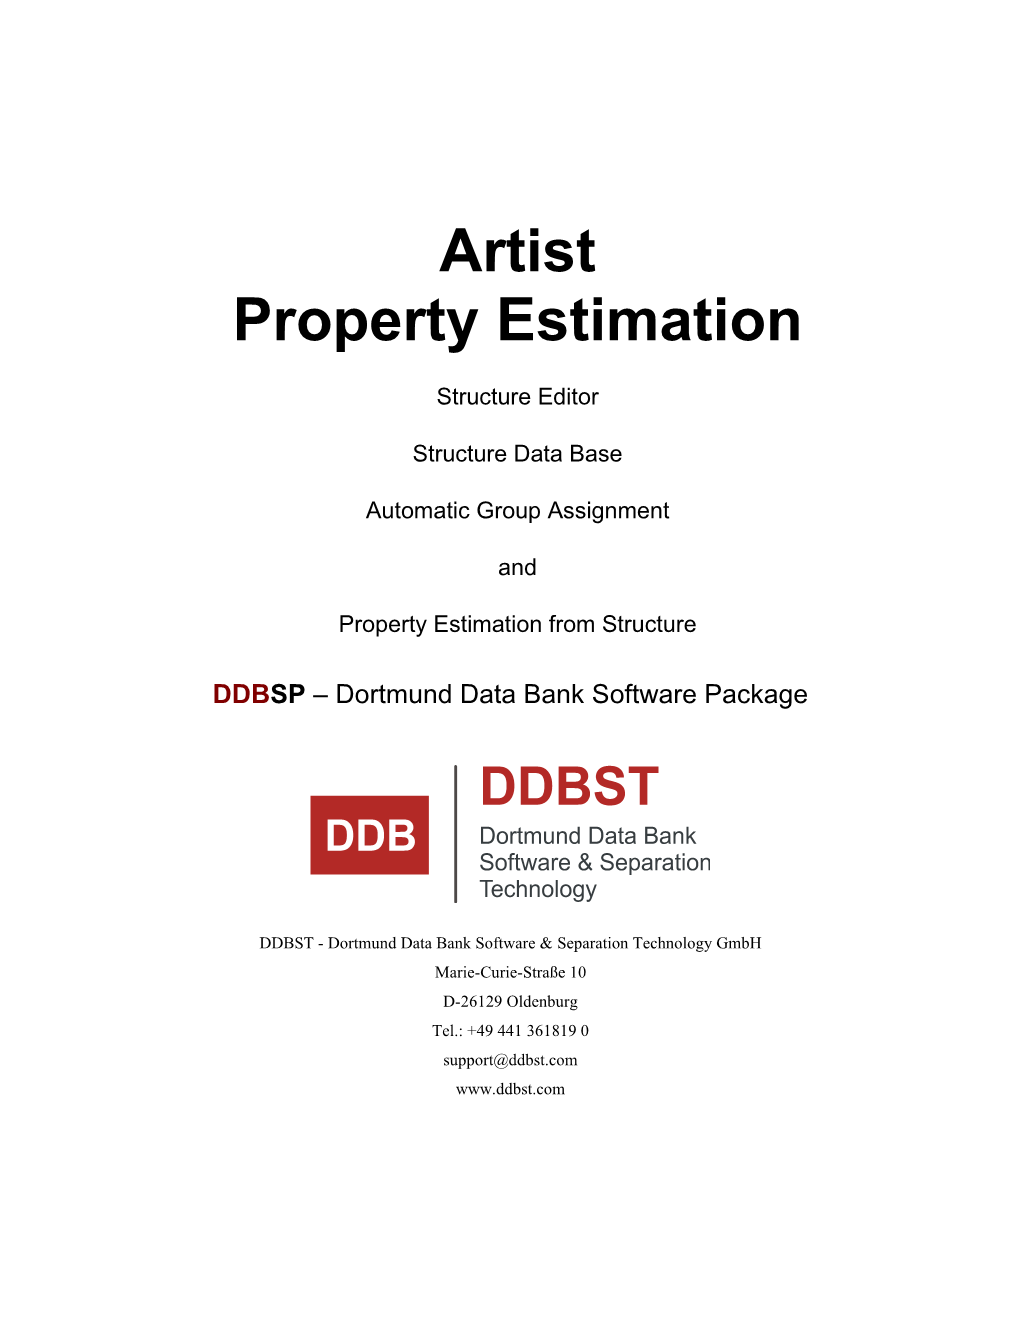 Artist Property Estimation